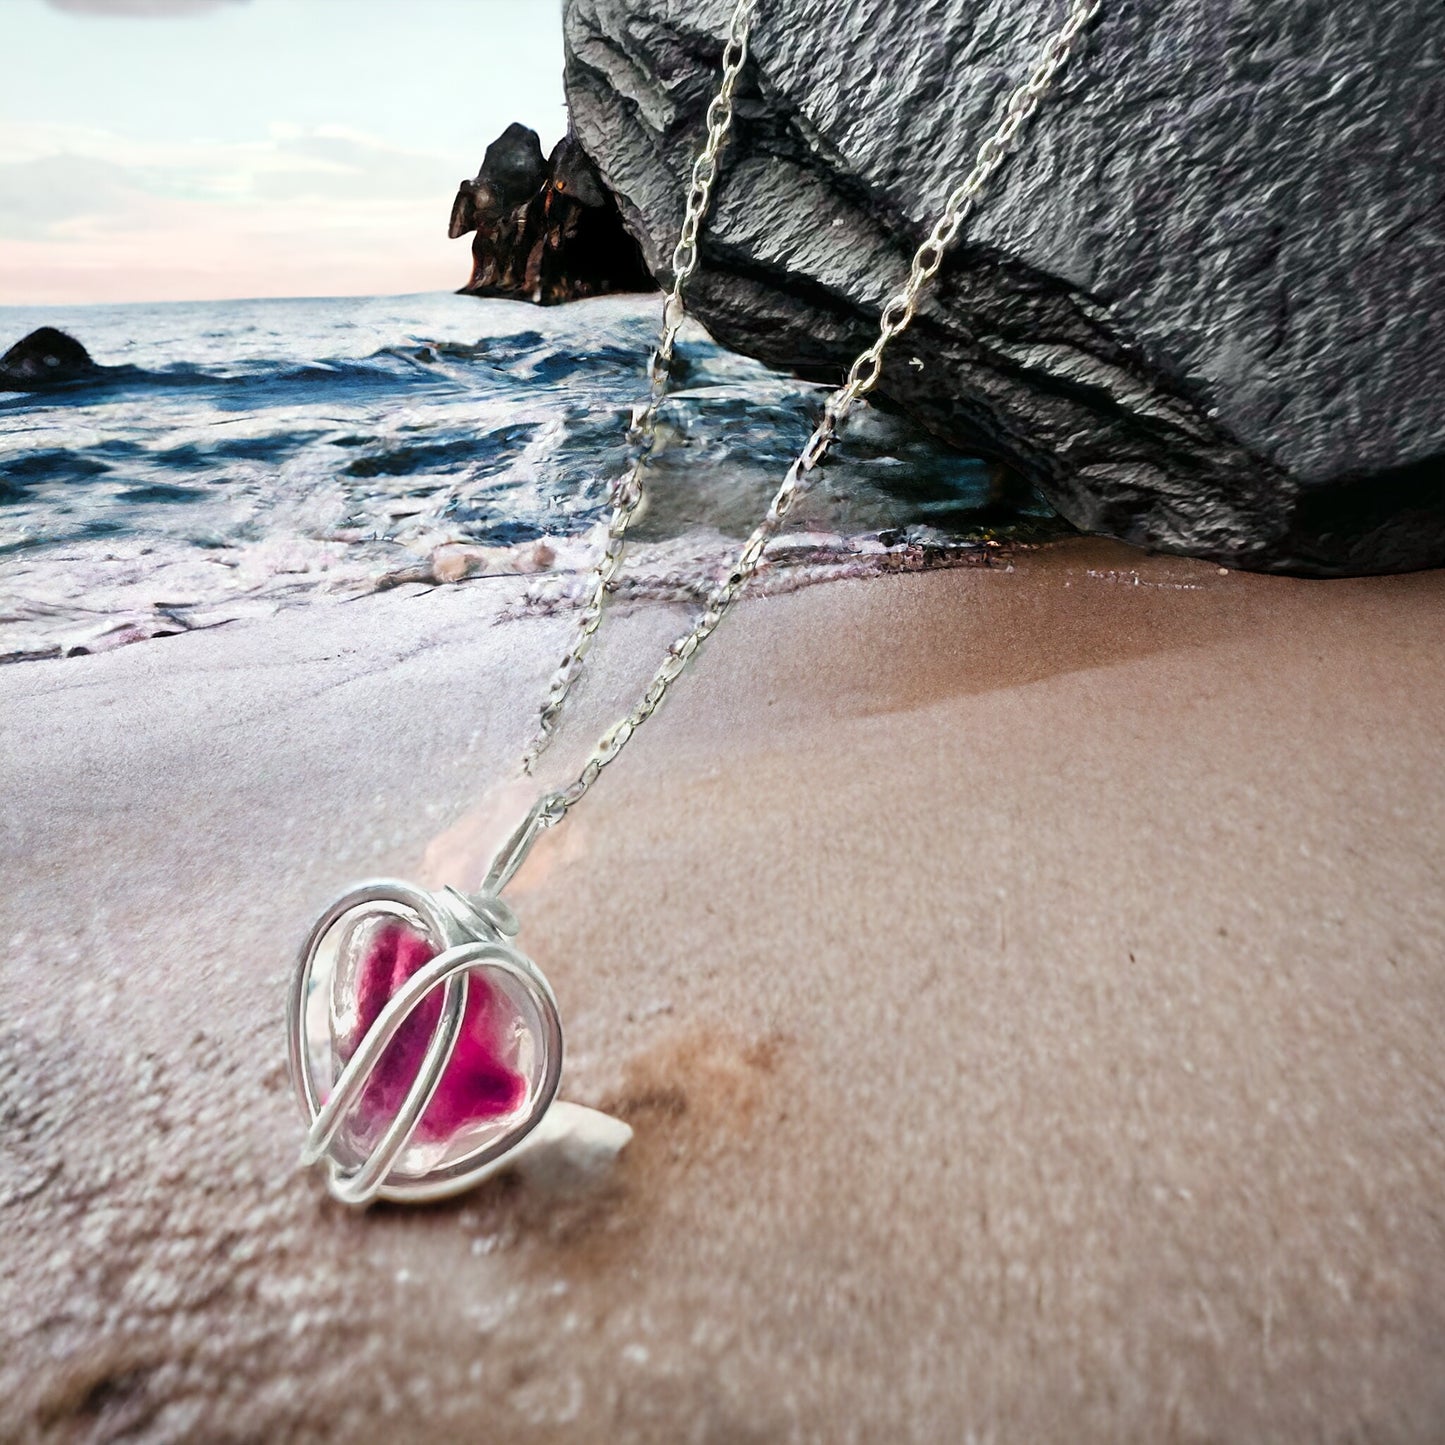 Seaham Sea Glass Multi Tone Pink Heart Pendant